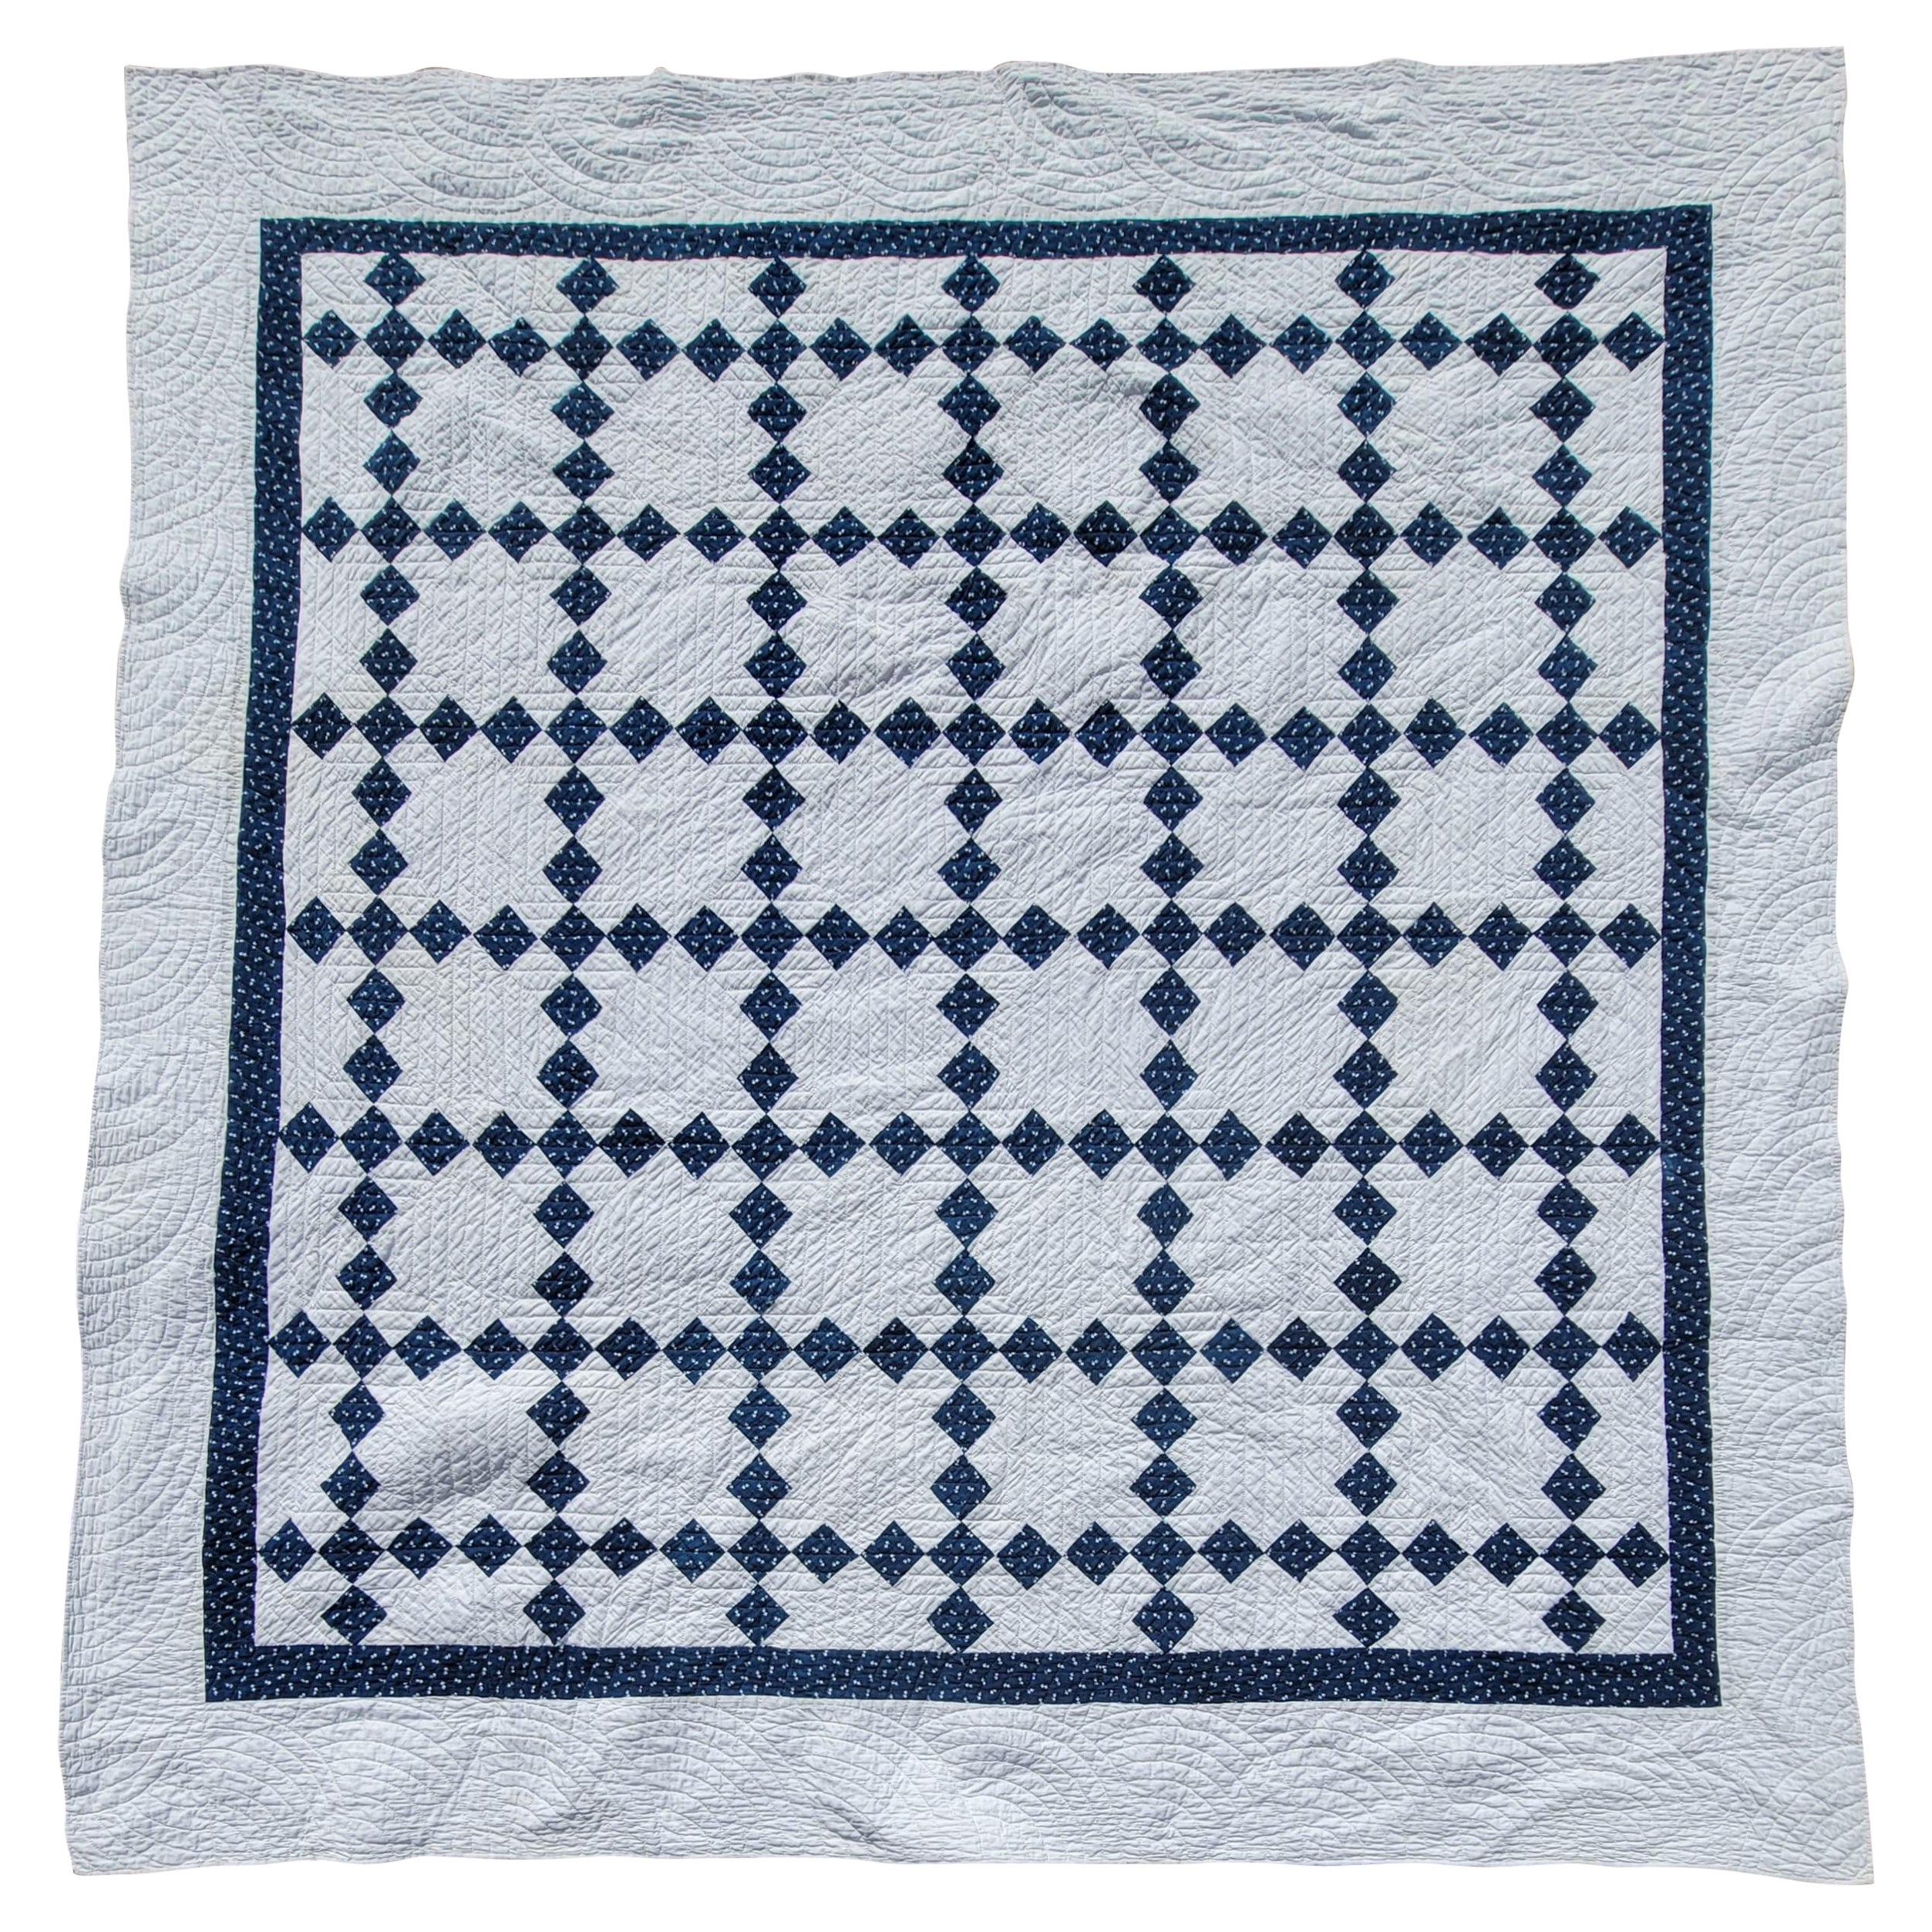 19thc Blue & White Irish Chain Quilt